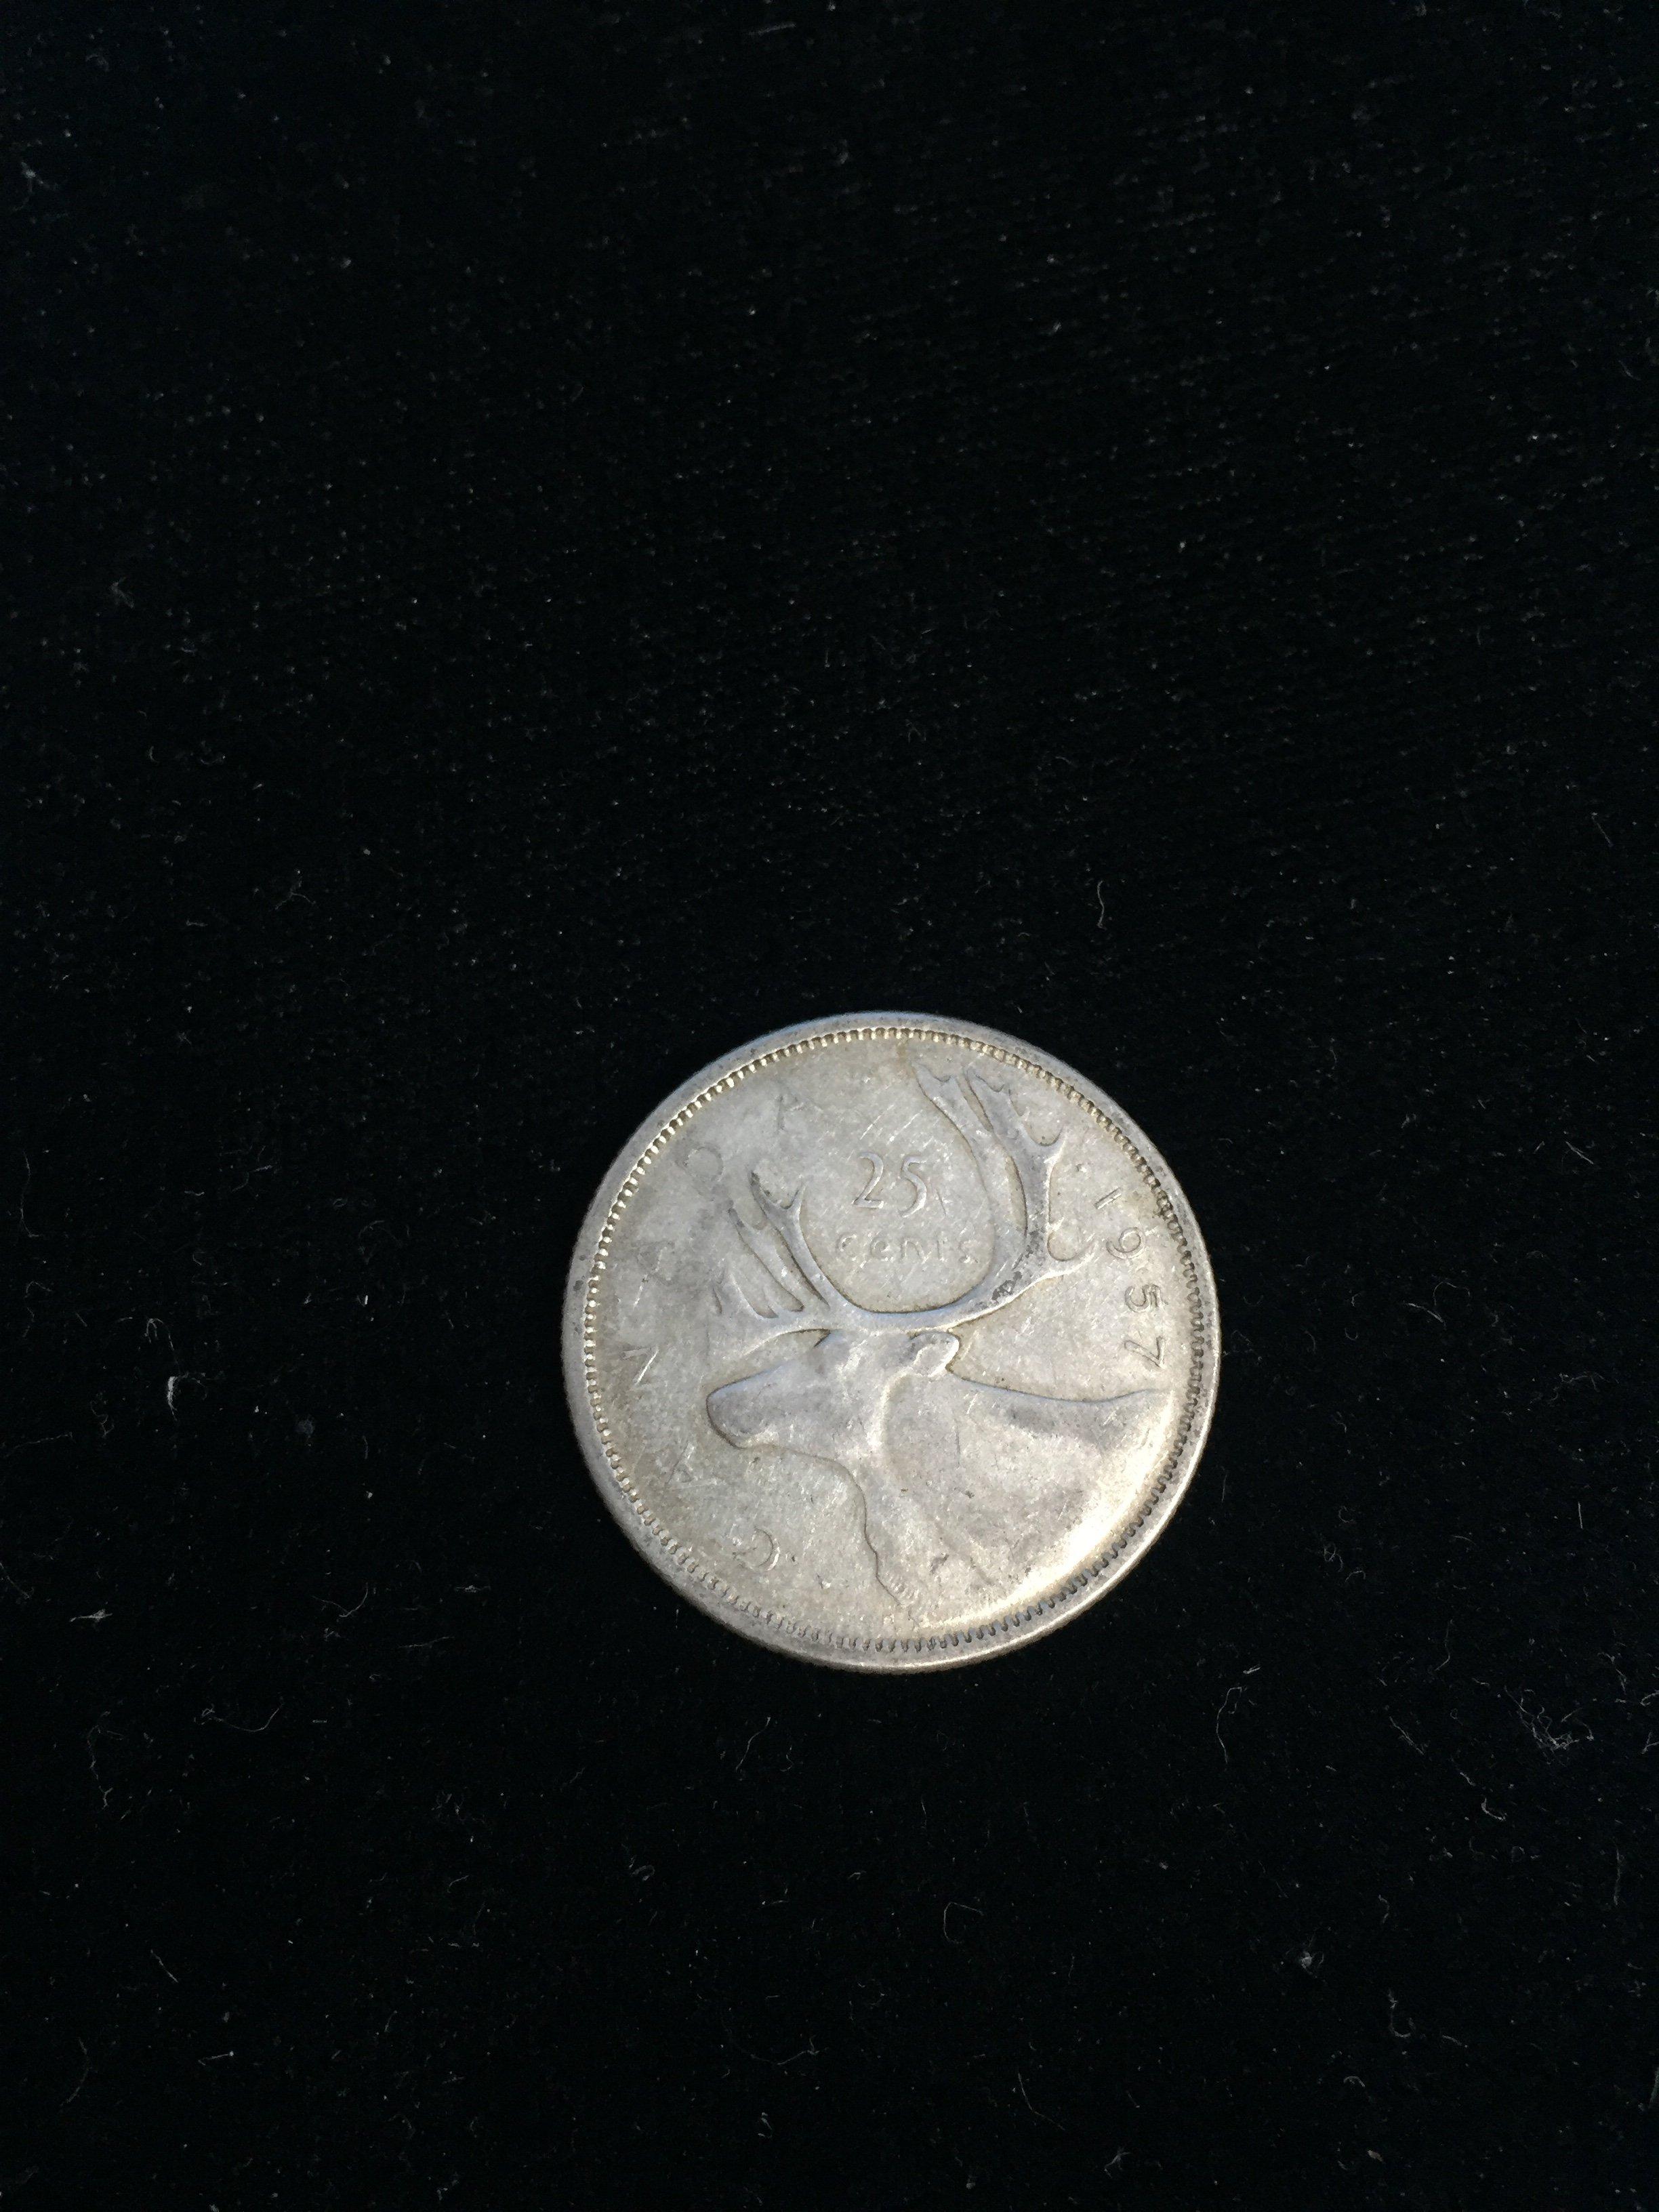 1957 Canadian Silver Quarter - 80% Silver Coin